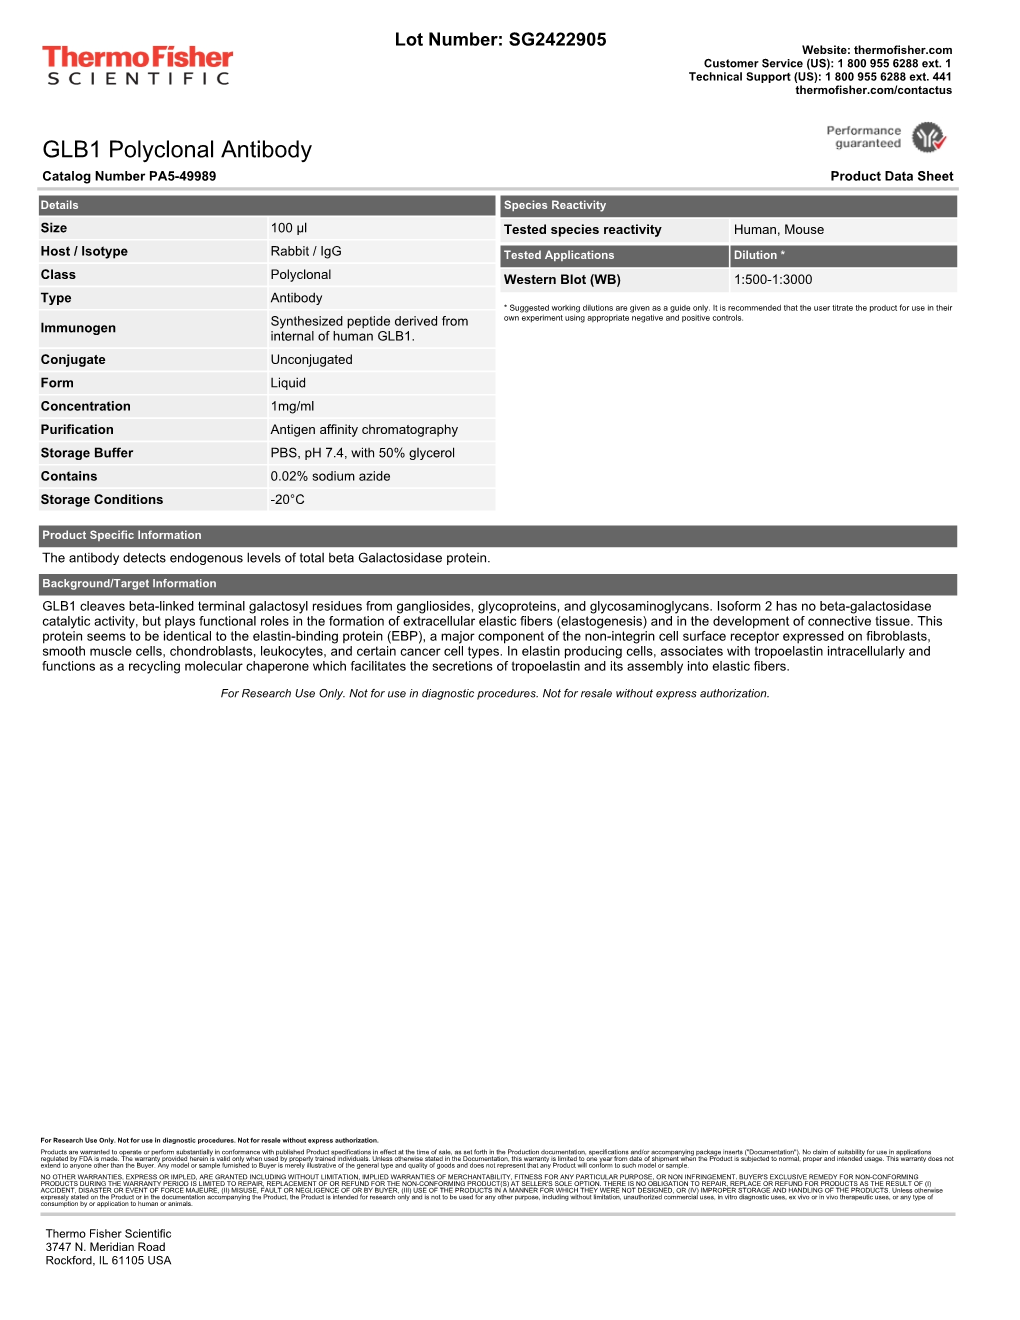 GLB1 Polyclonal Antibody Catalog Number PA5-49989 Product Data Sheet